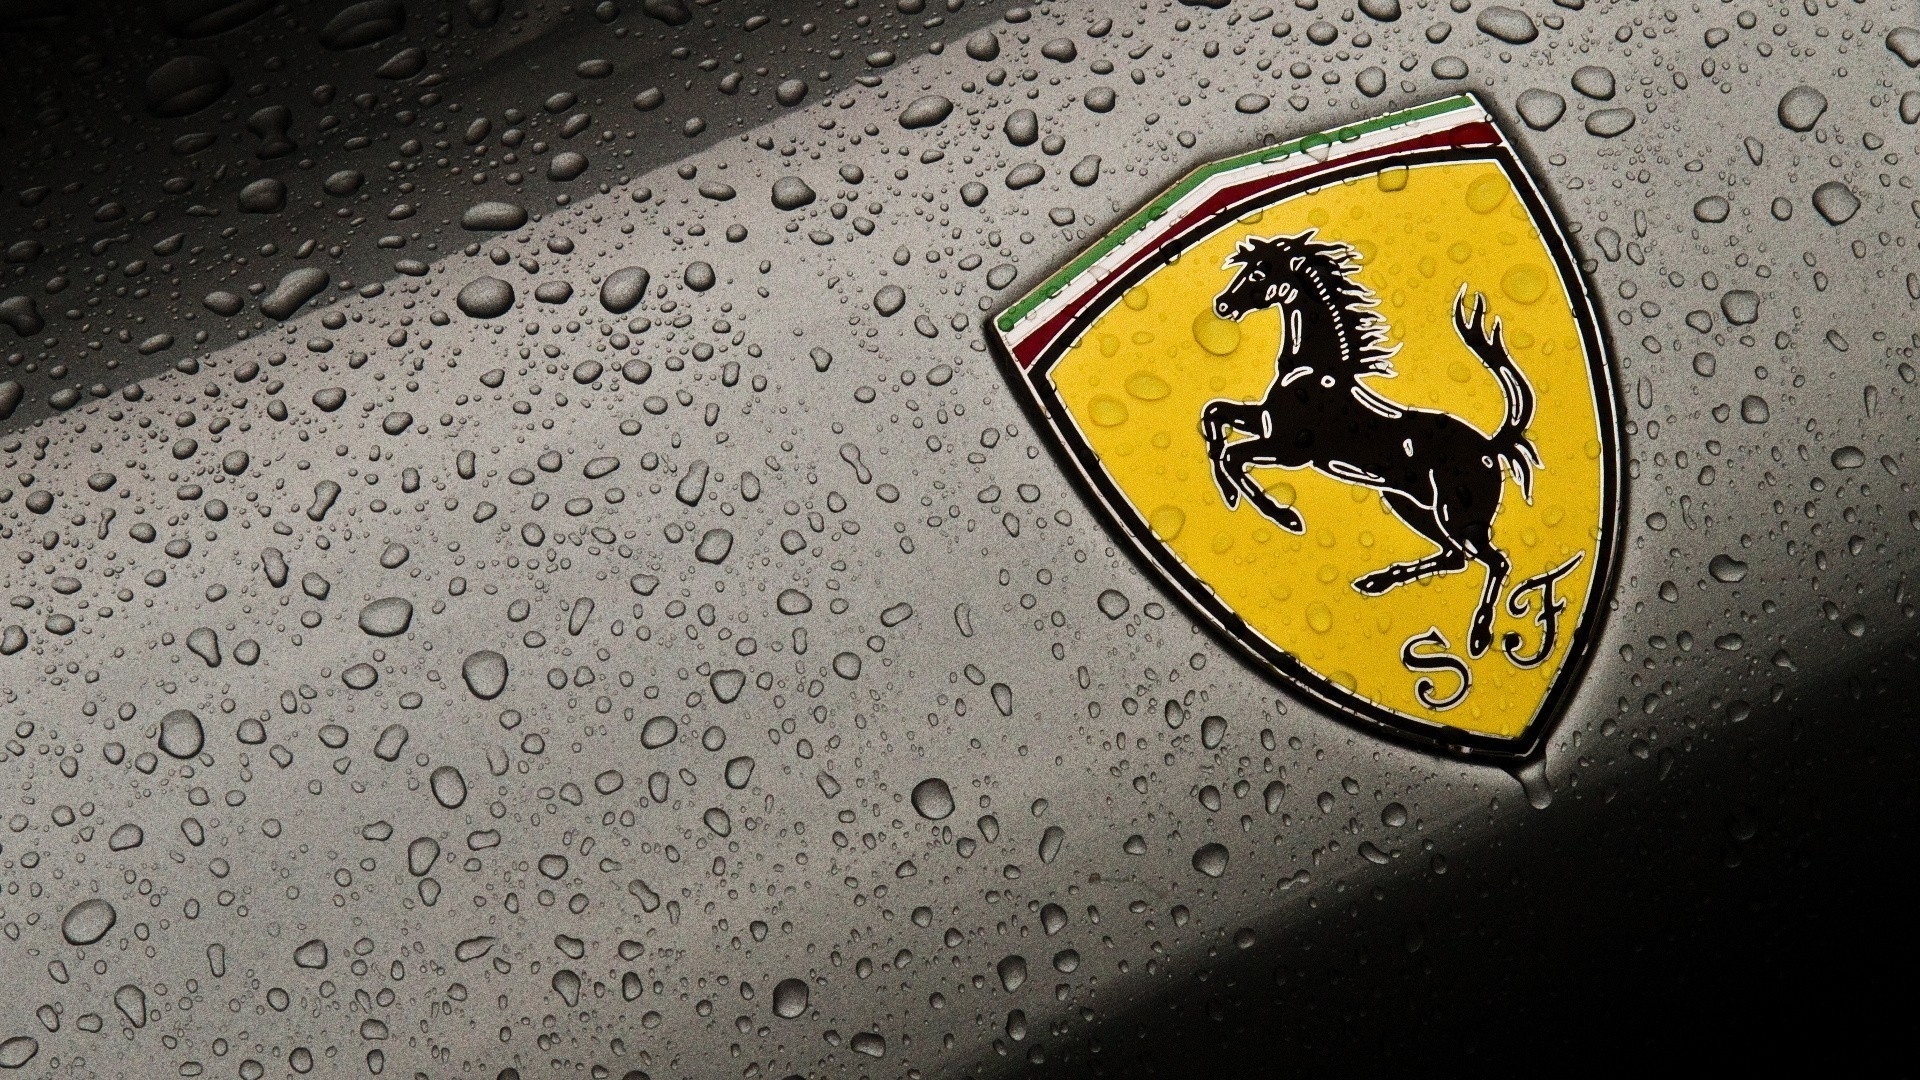 10 Most Popular Ferrari Logo Wallpaper 1920X1080 FULL HD 1920×1080 For PC Background 2020